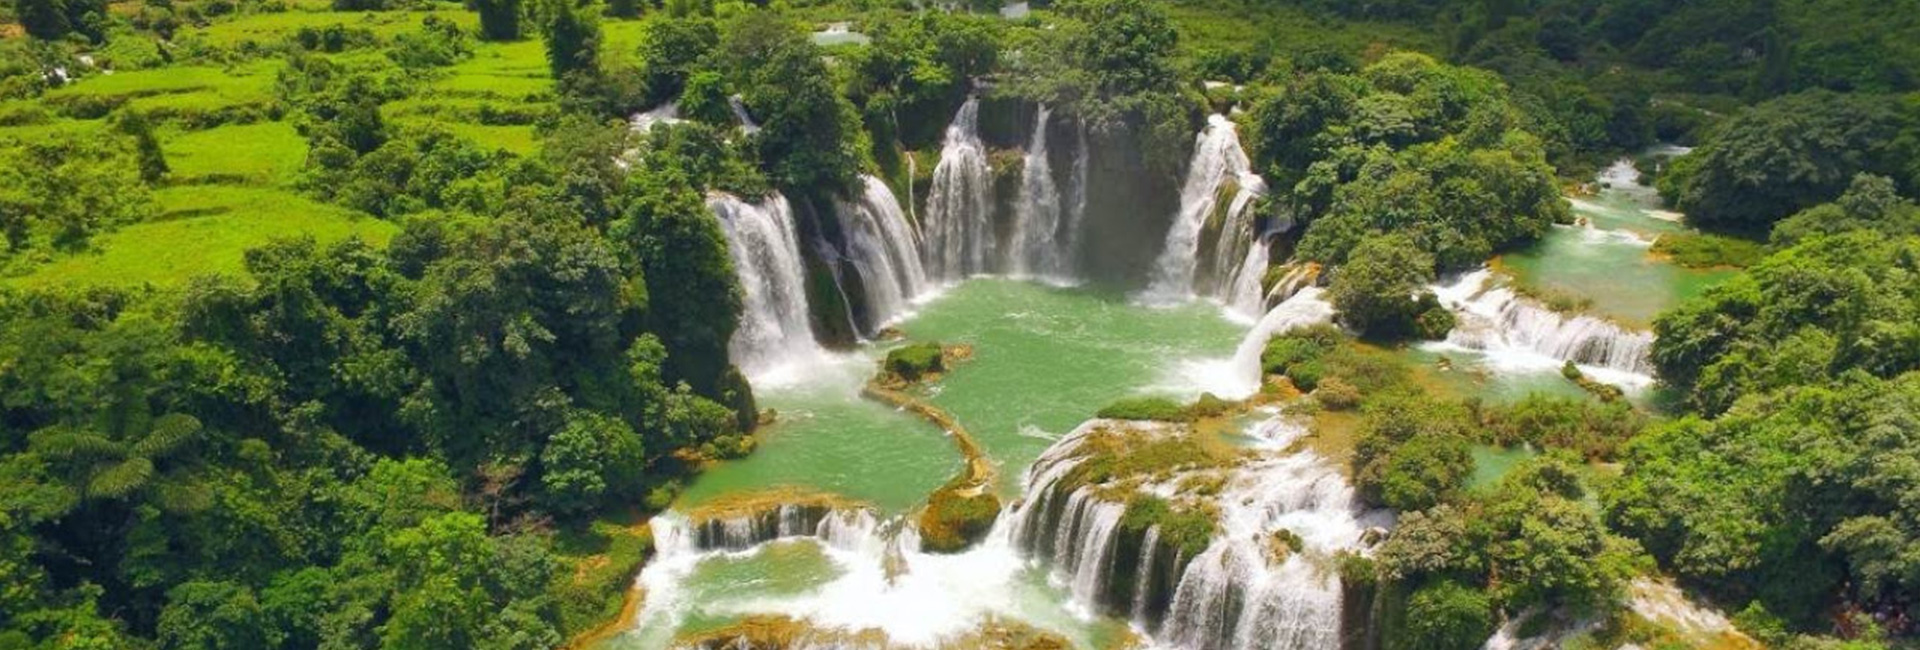 Ban Gioc Waterfall – an off beaten track destination